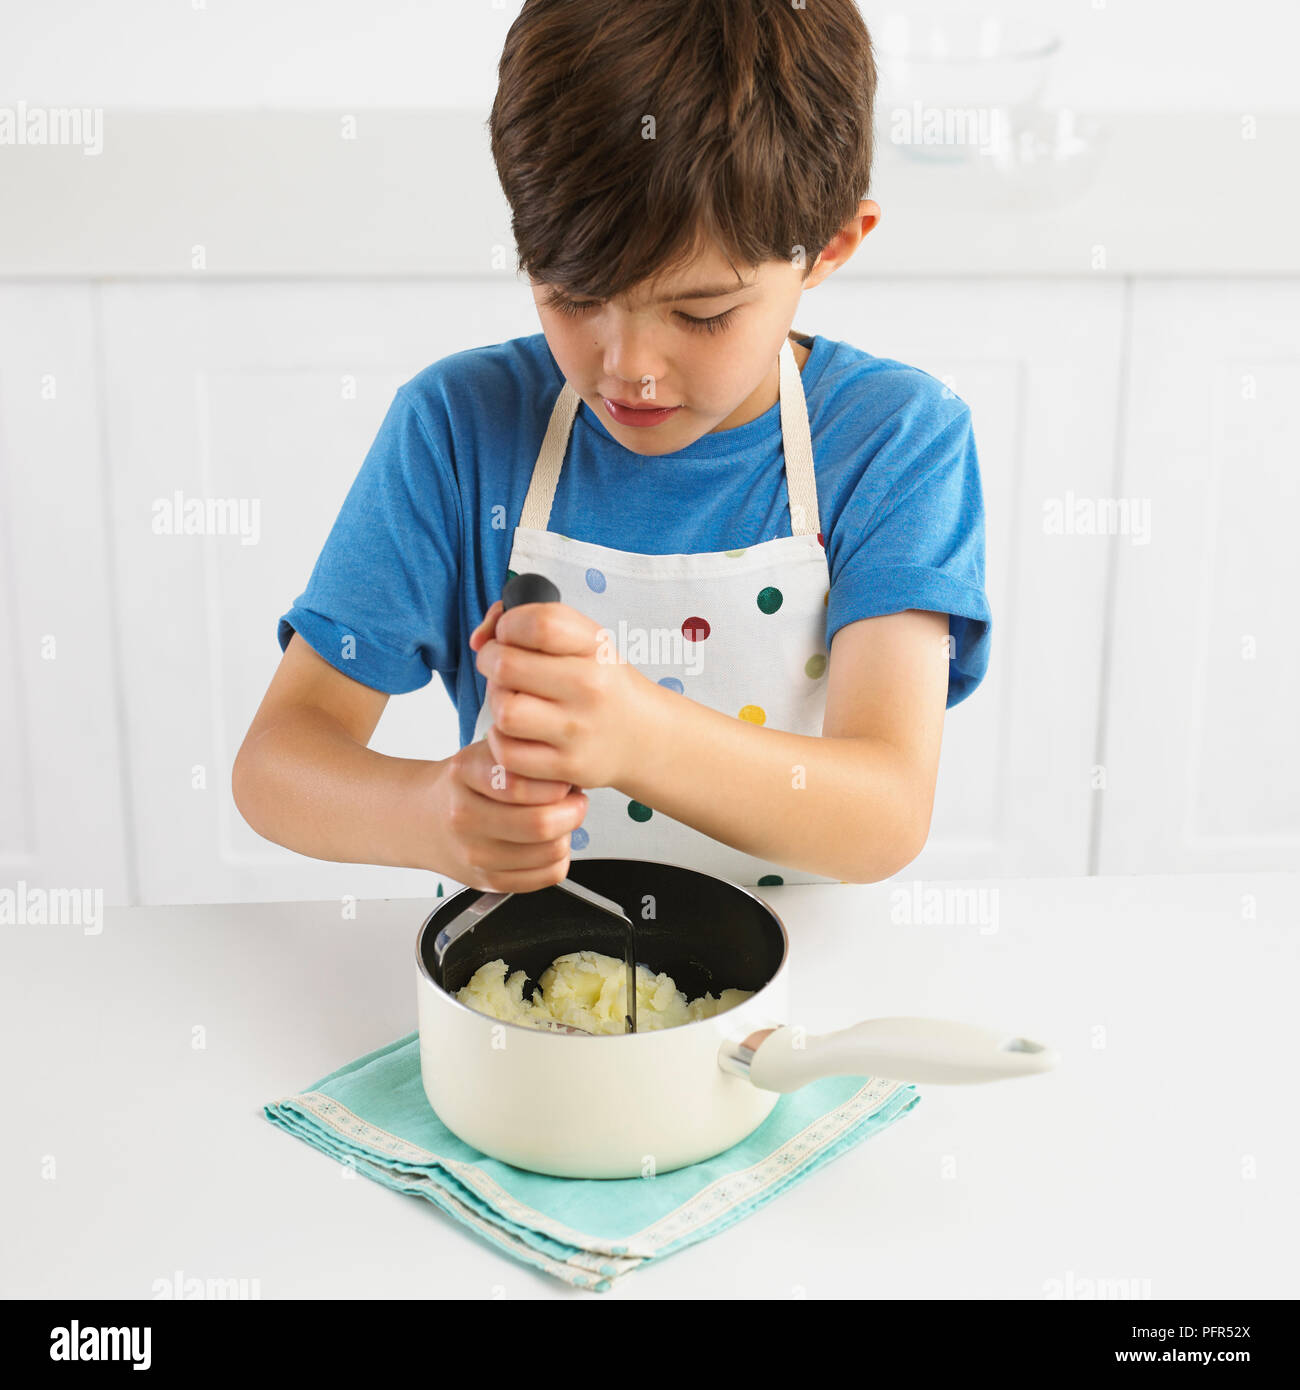 Boy mashing potatoes in a saucepan, 7 years Stock Photo